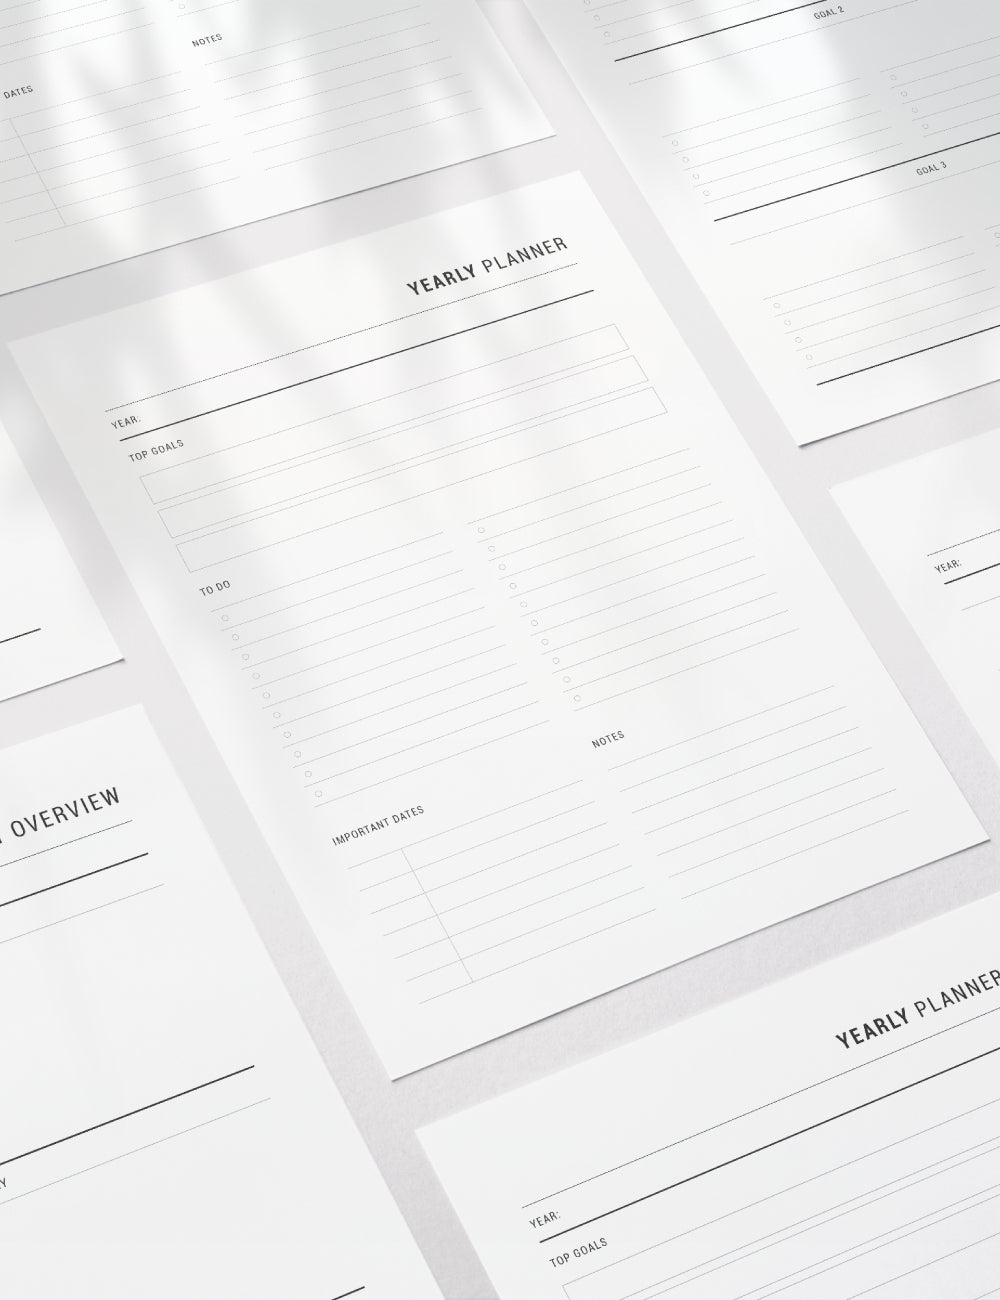 Printable Yearly Planner | Undated | Printable Planner Essentials | A4 | A5 | US Letter | Printable Planner Pages | Minimal Aesthetic | Clean Design | PDF + JPEG | PAPER MOON Art & Design